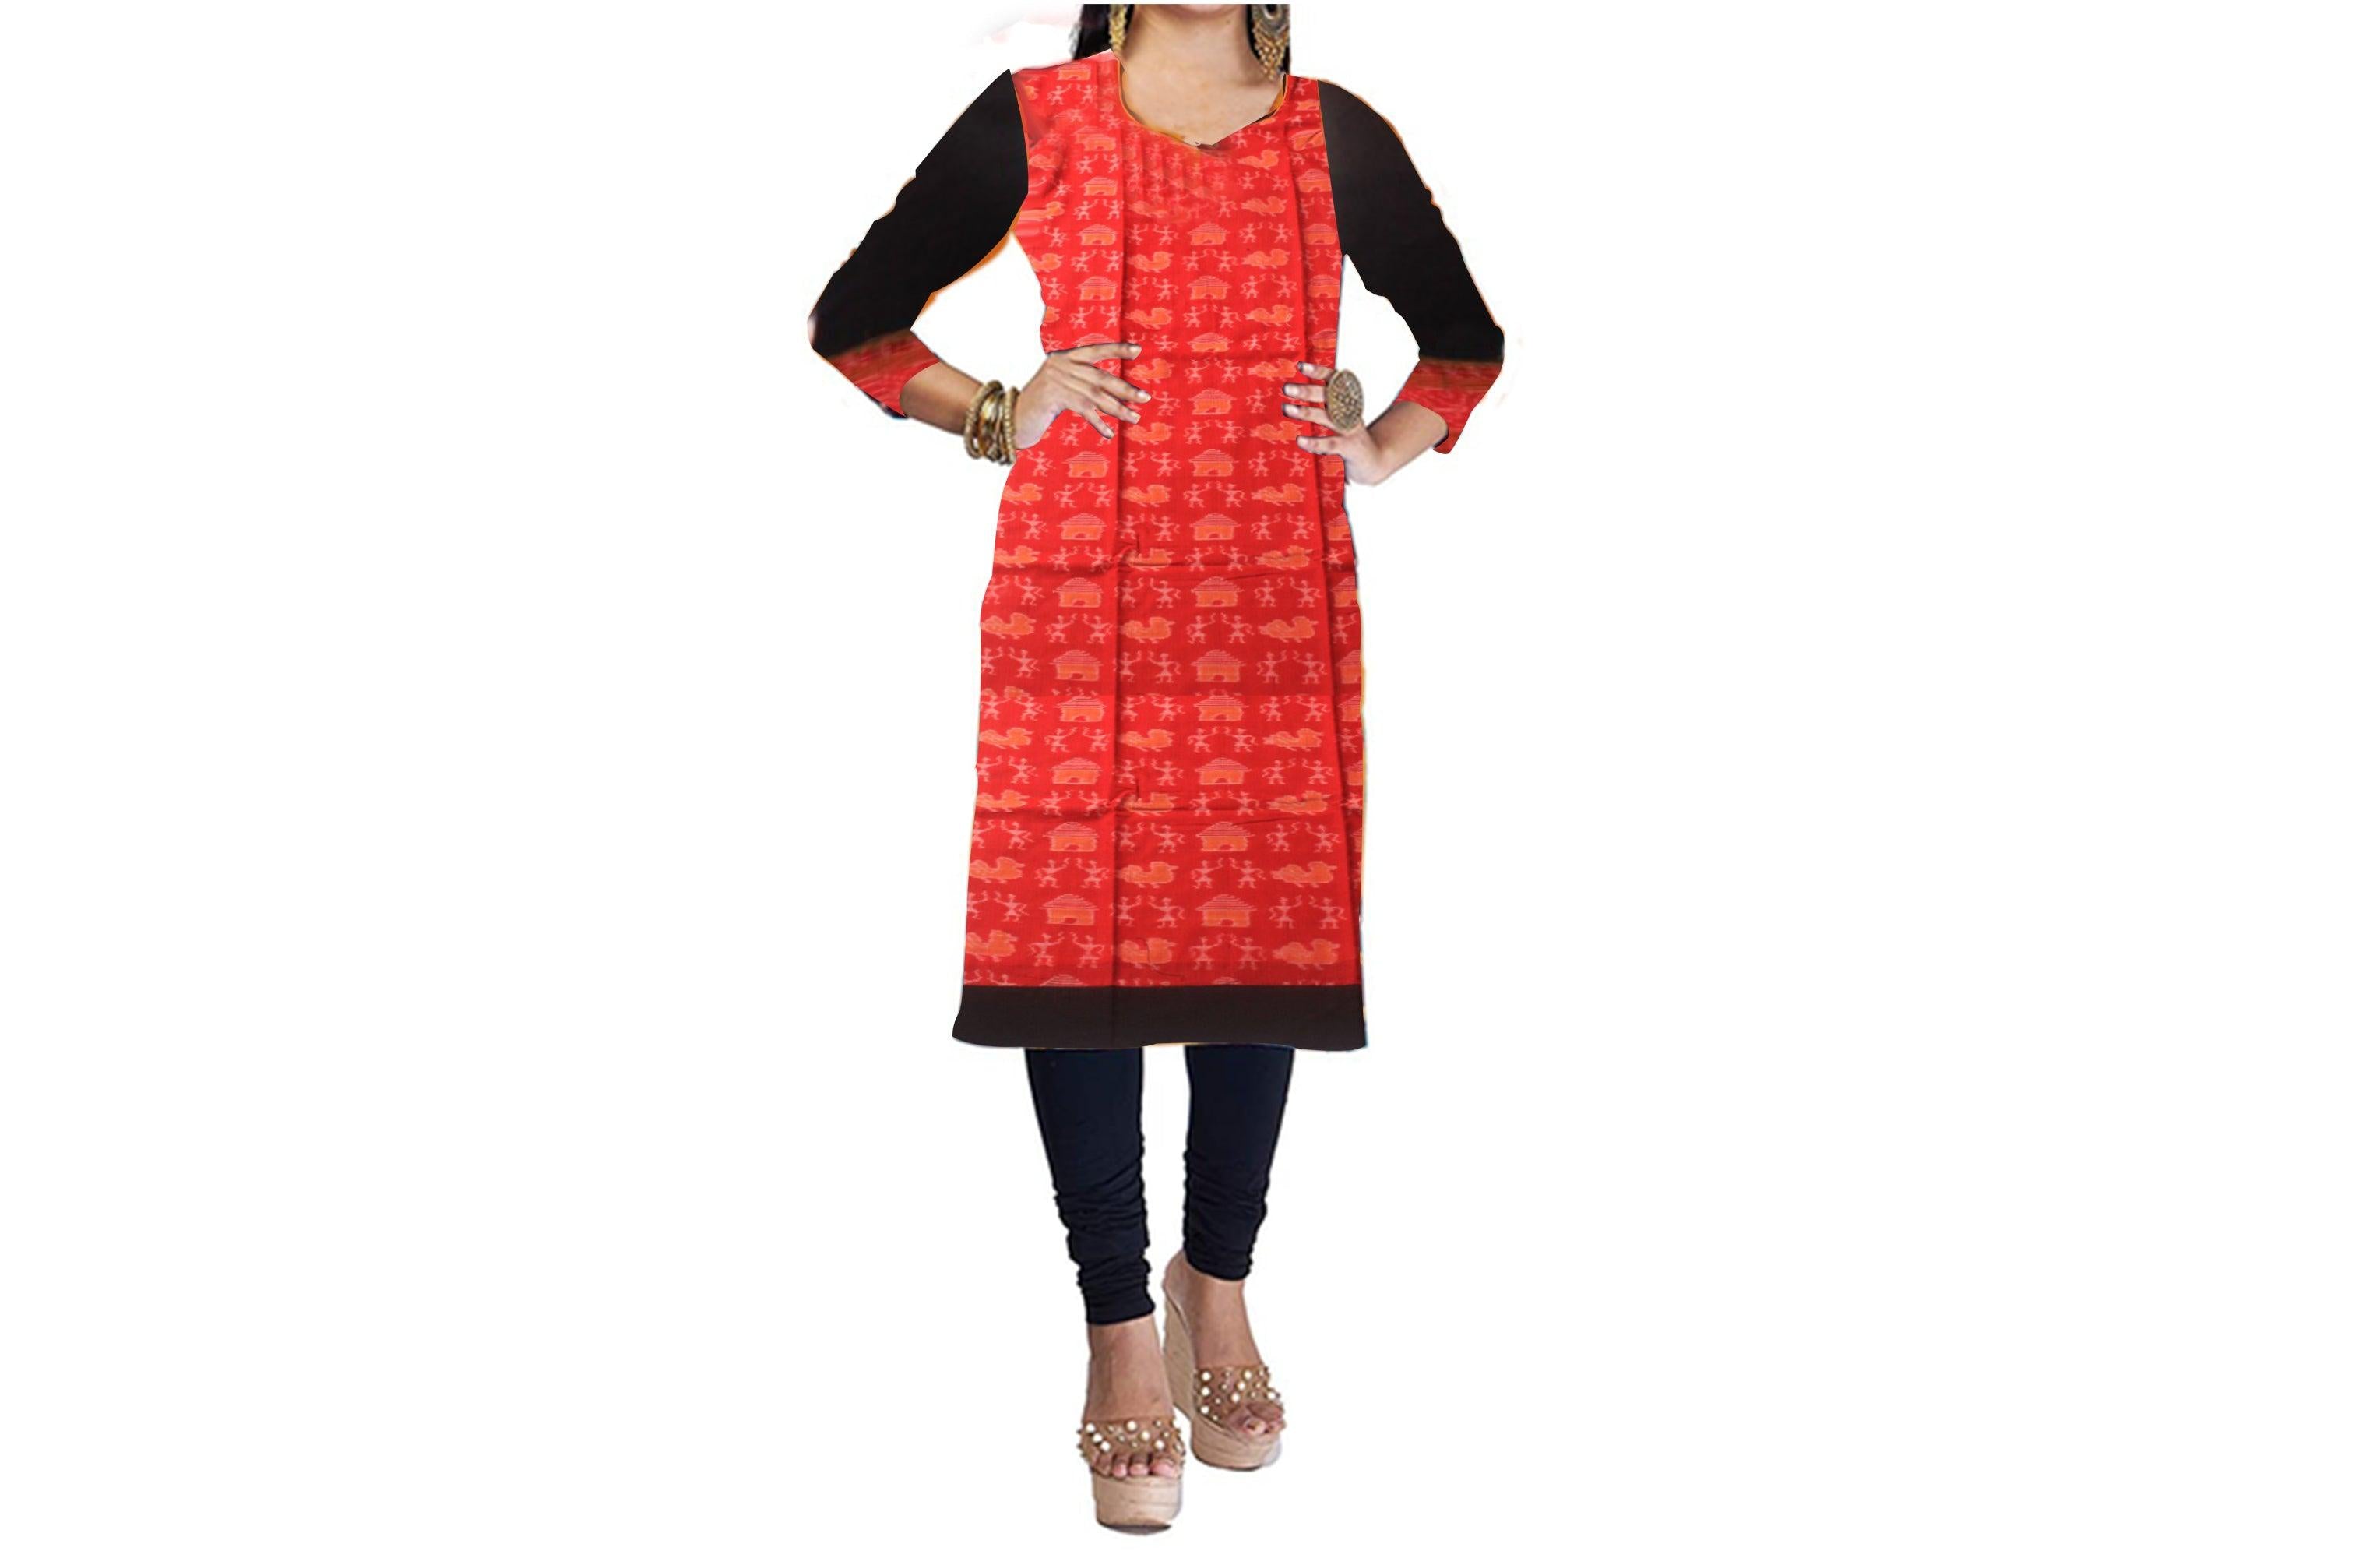 SAMBALPURI DESIGNER DRESS IN RED AND BLACK COLOR. - Koshali Arts & Crafts Enterprise